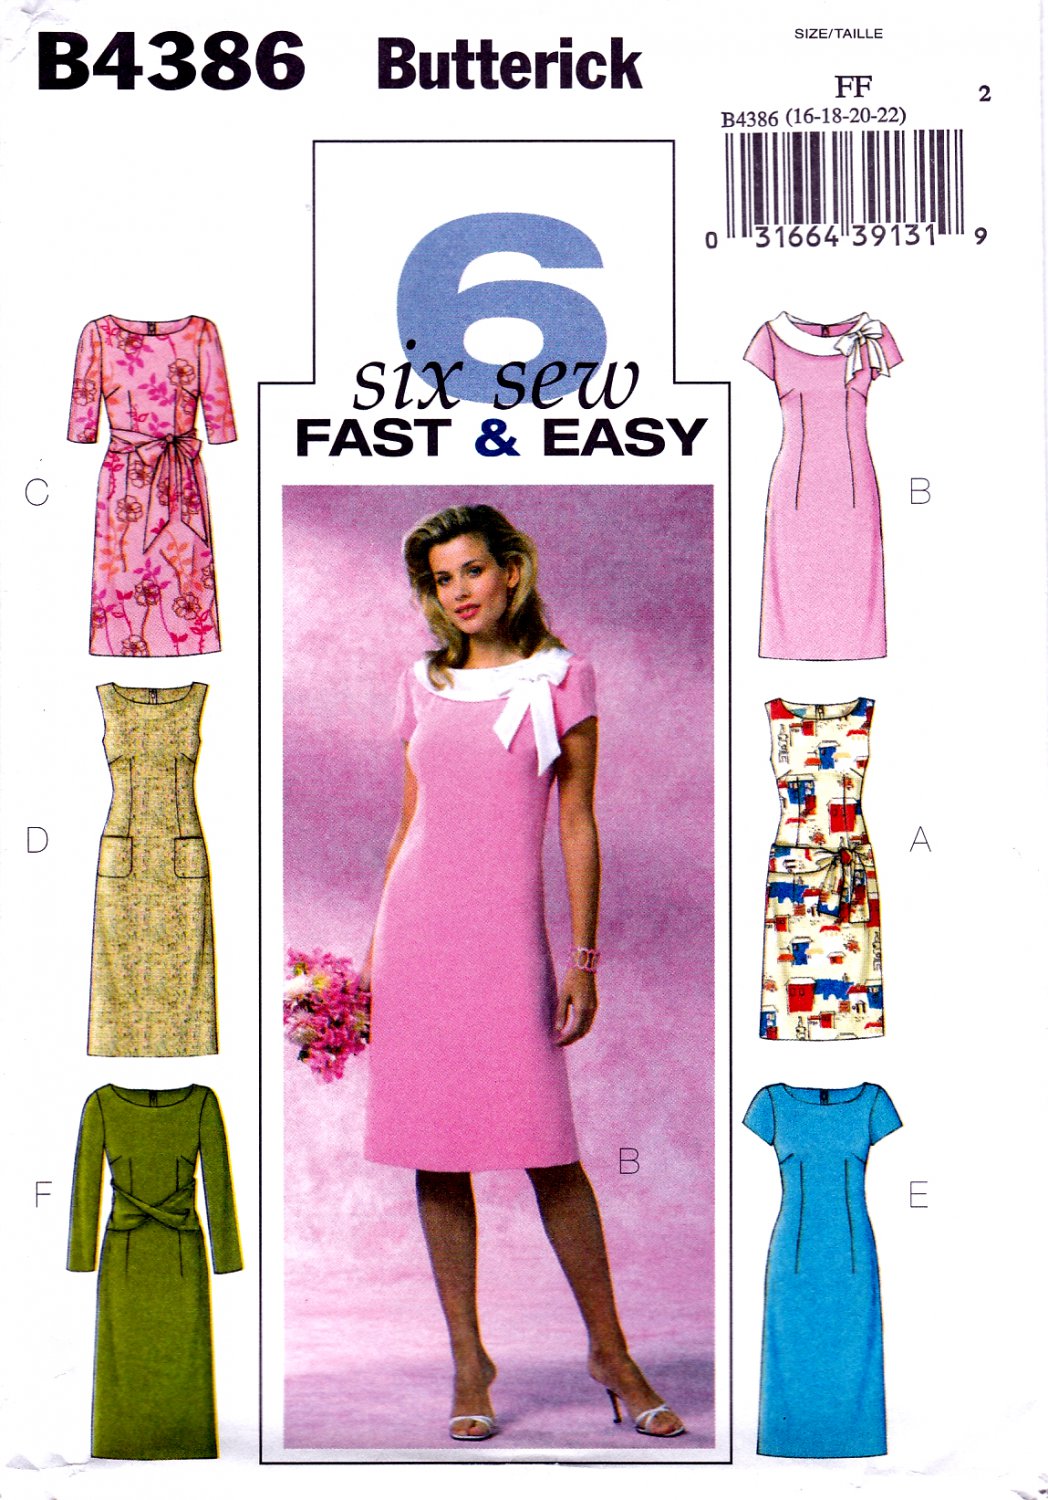 Butterick B4386 Misses Womens Petite Dresses Sewing Pattern Sizes 16-18-20-22